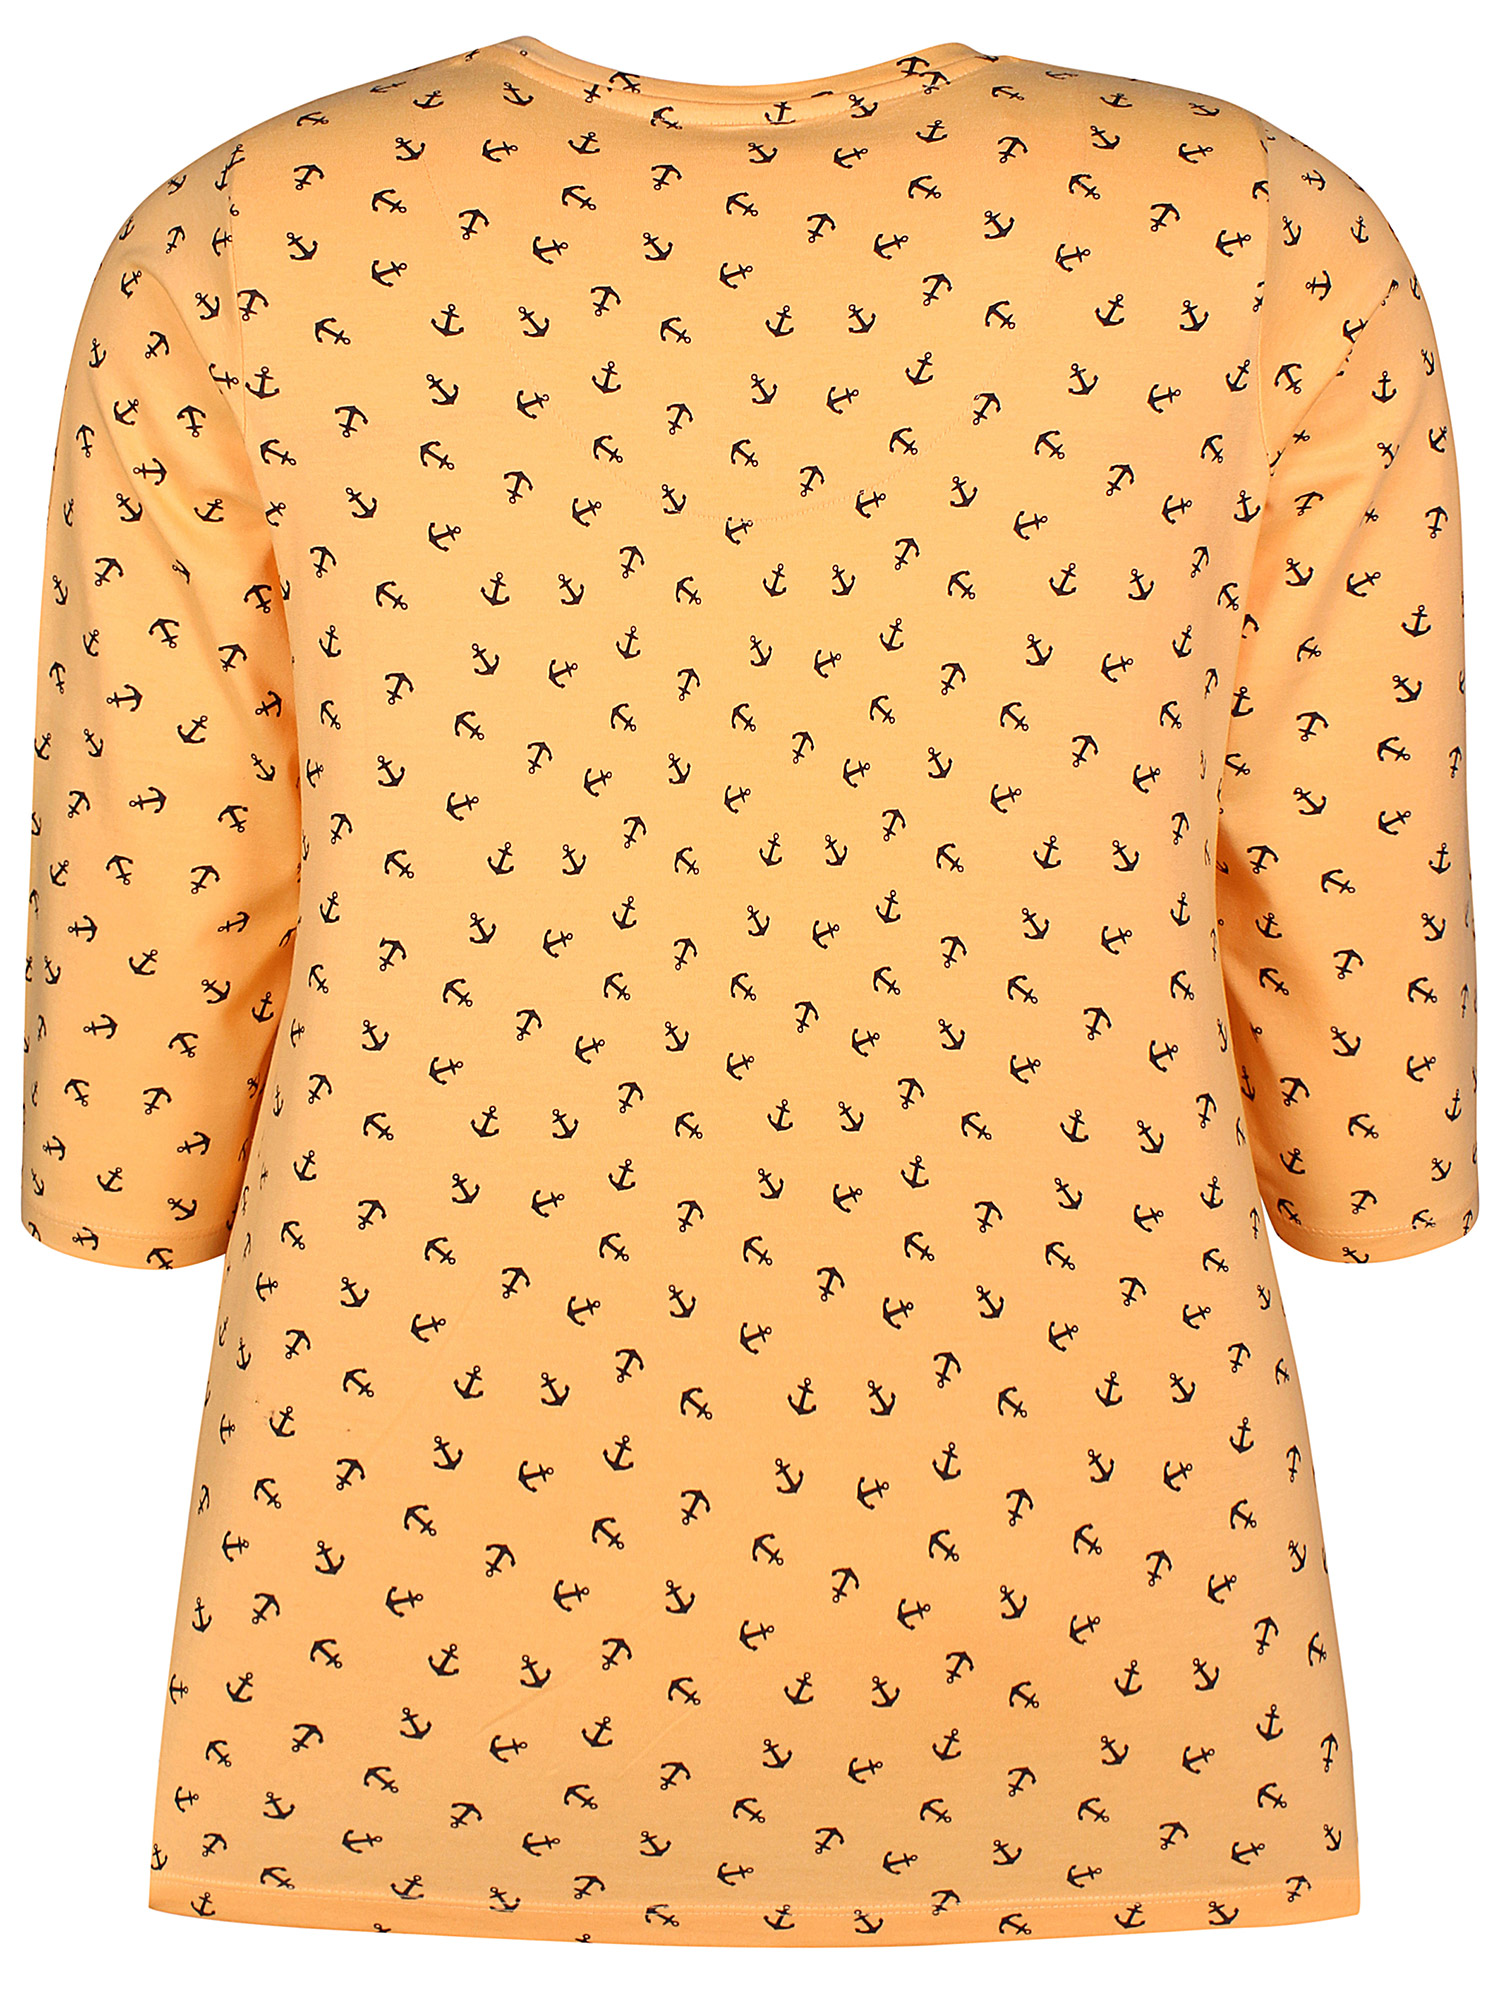 ALBERTA - Fersken orange jersey bluse med sorte anker fra Zhenzi